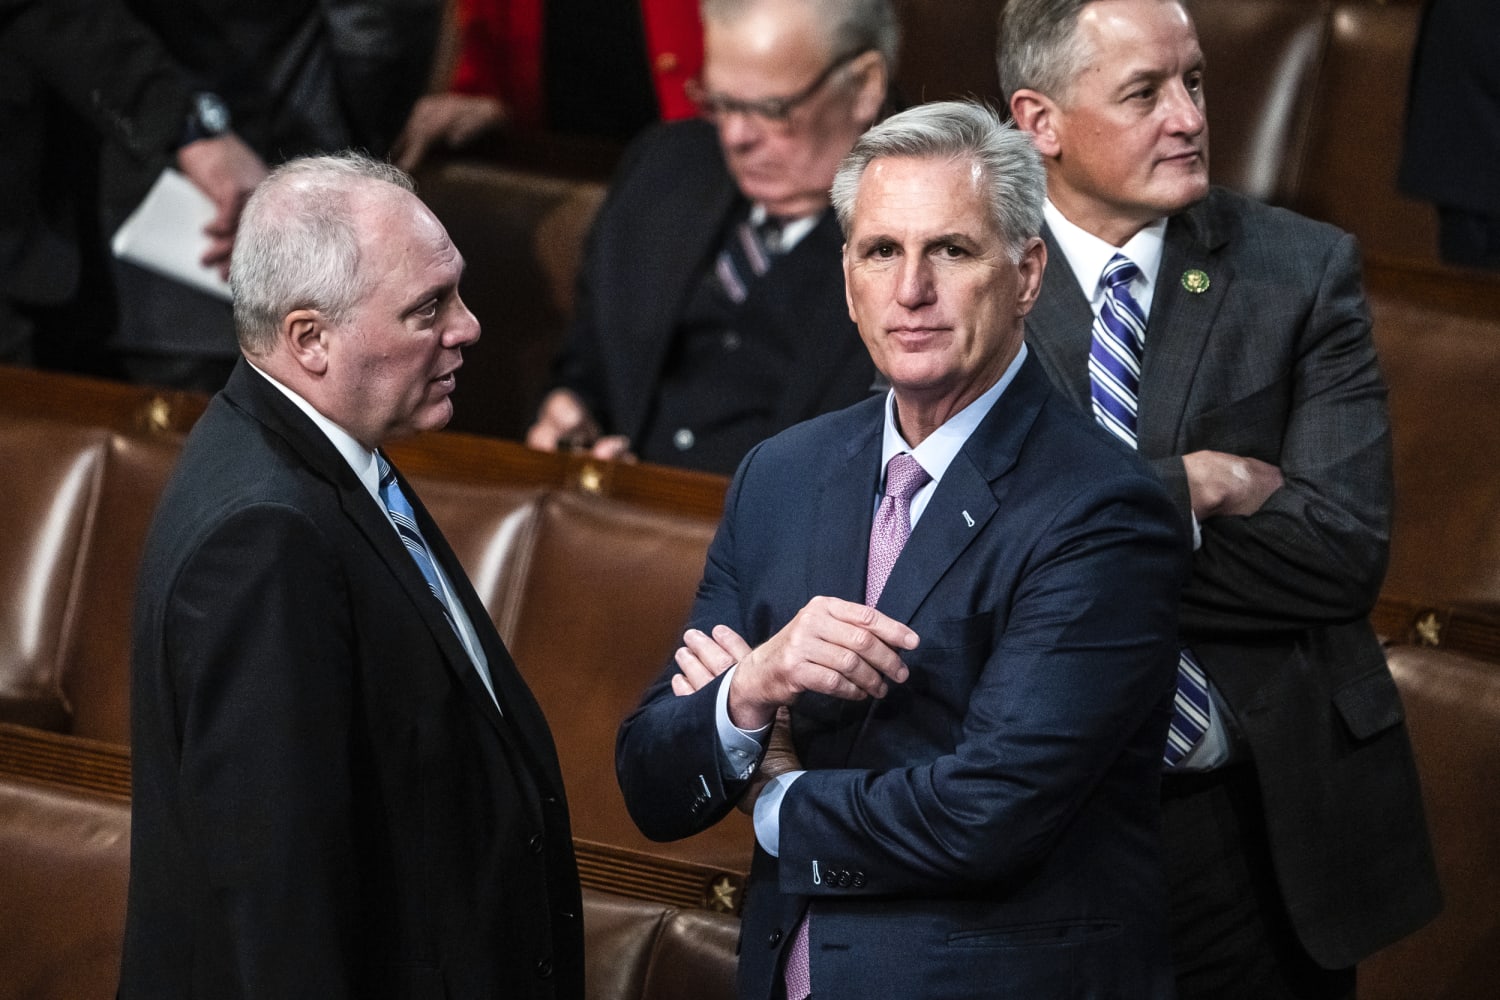 Tensions between House GOP leaders complicate hopes of passing crucial bills